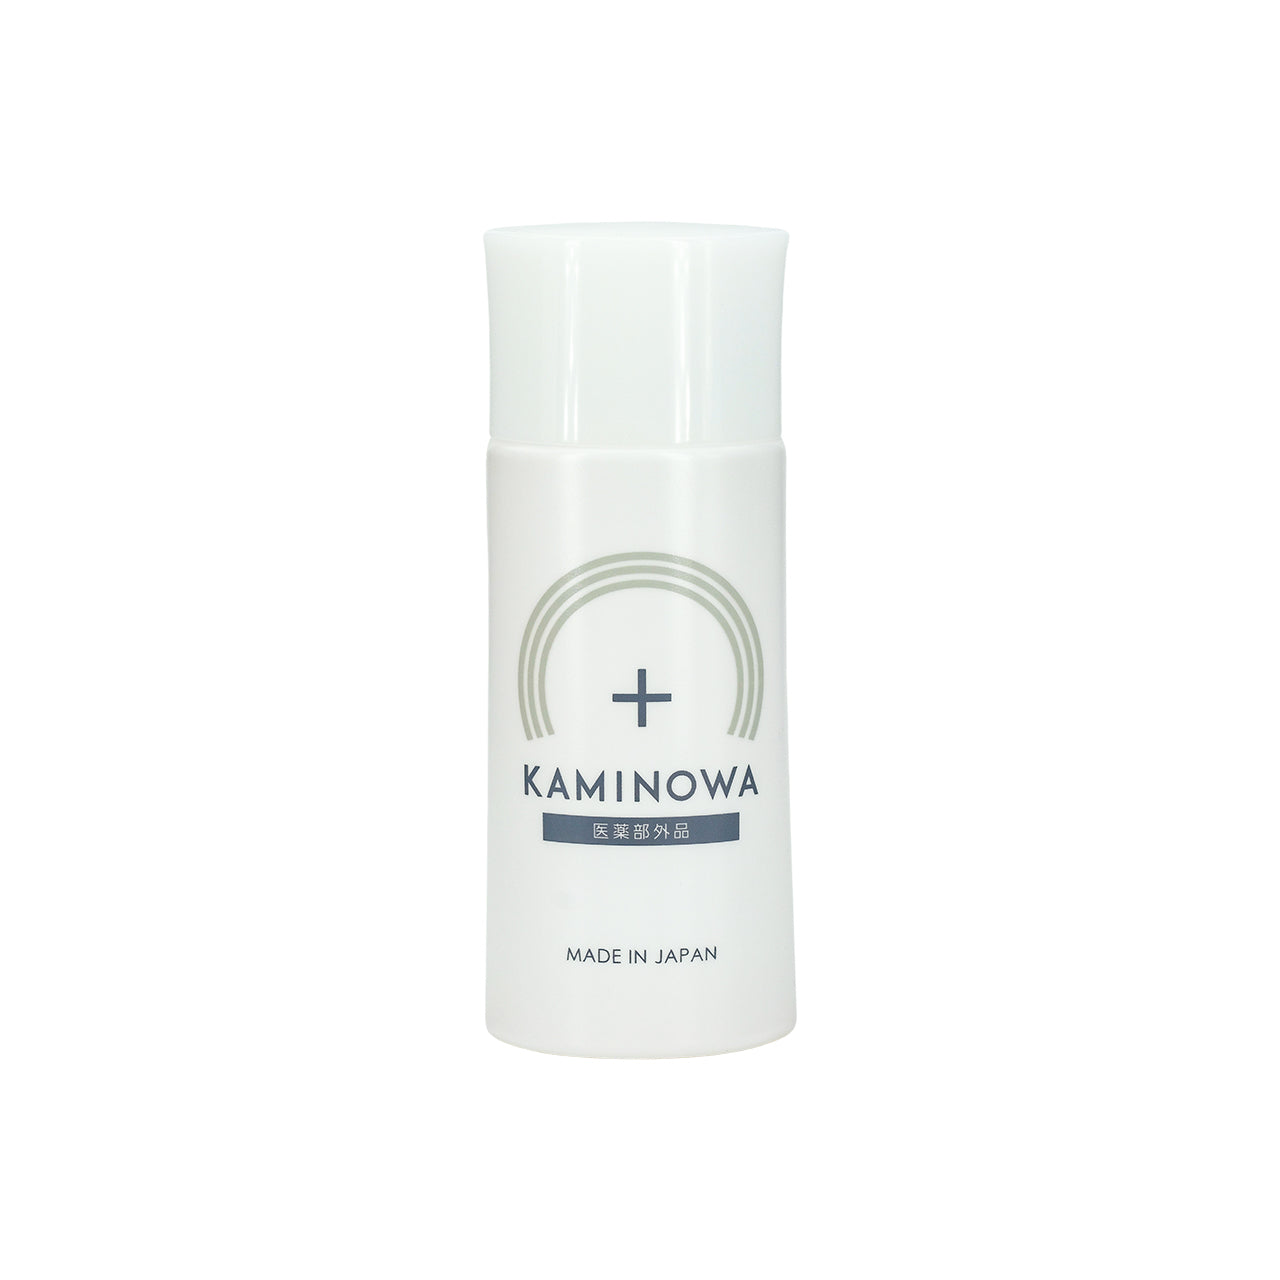 Kaminowa Hair Tonic Serum 80g | Sasa Global eShop